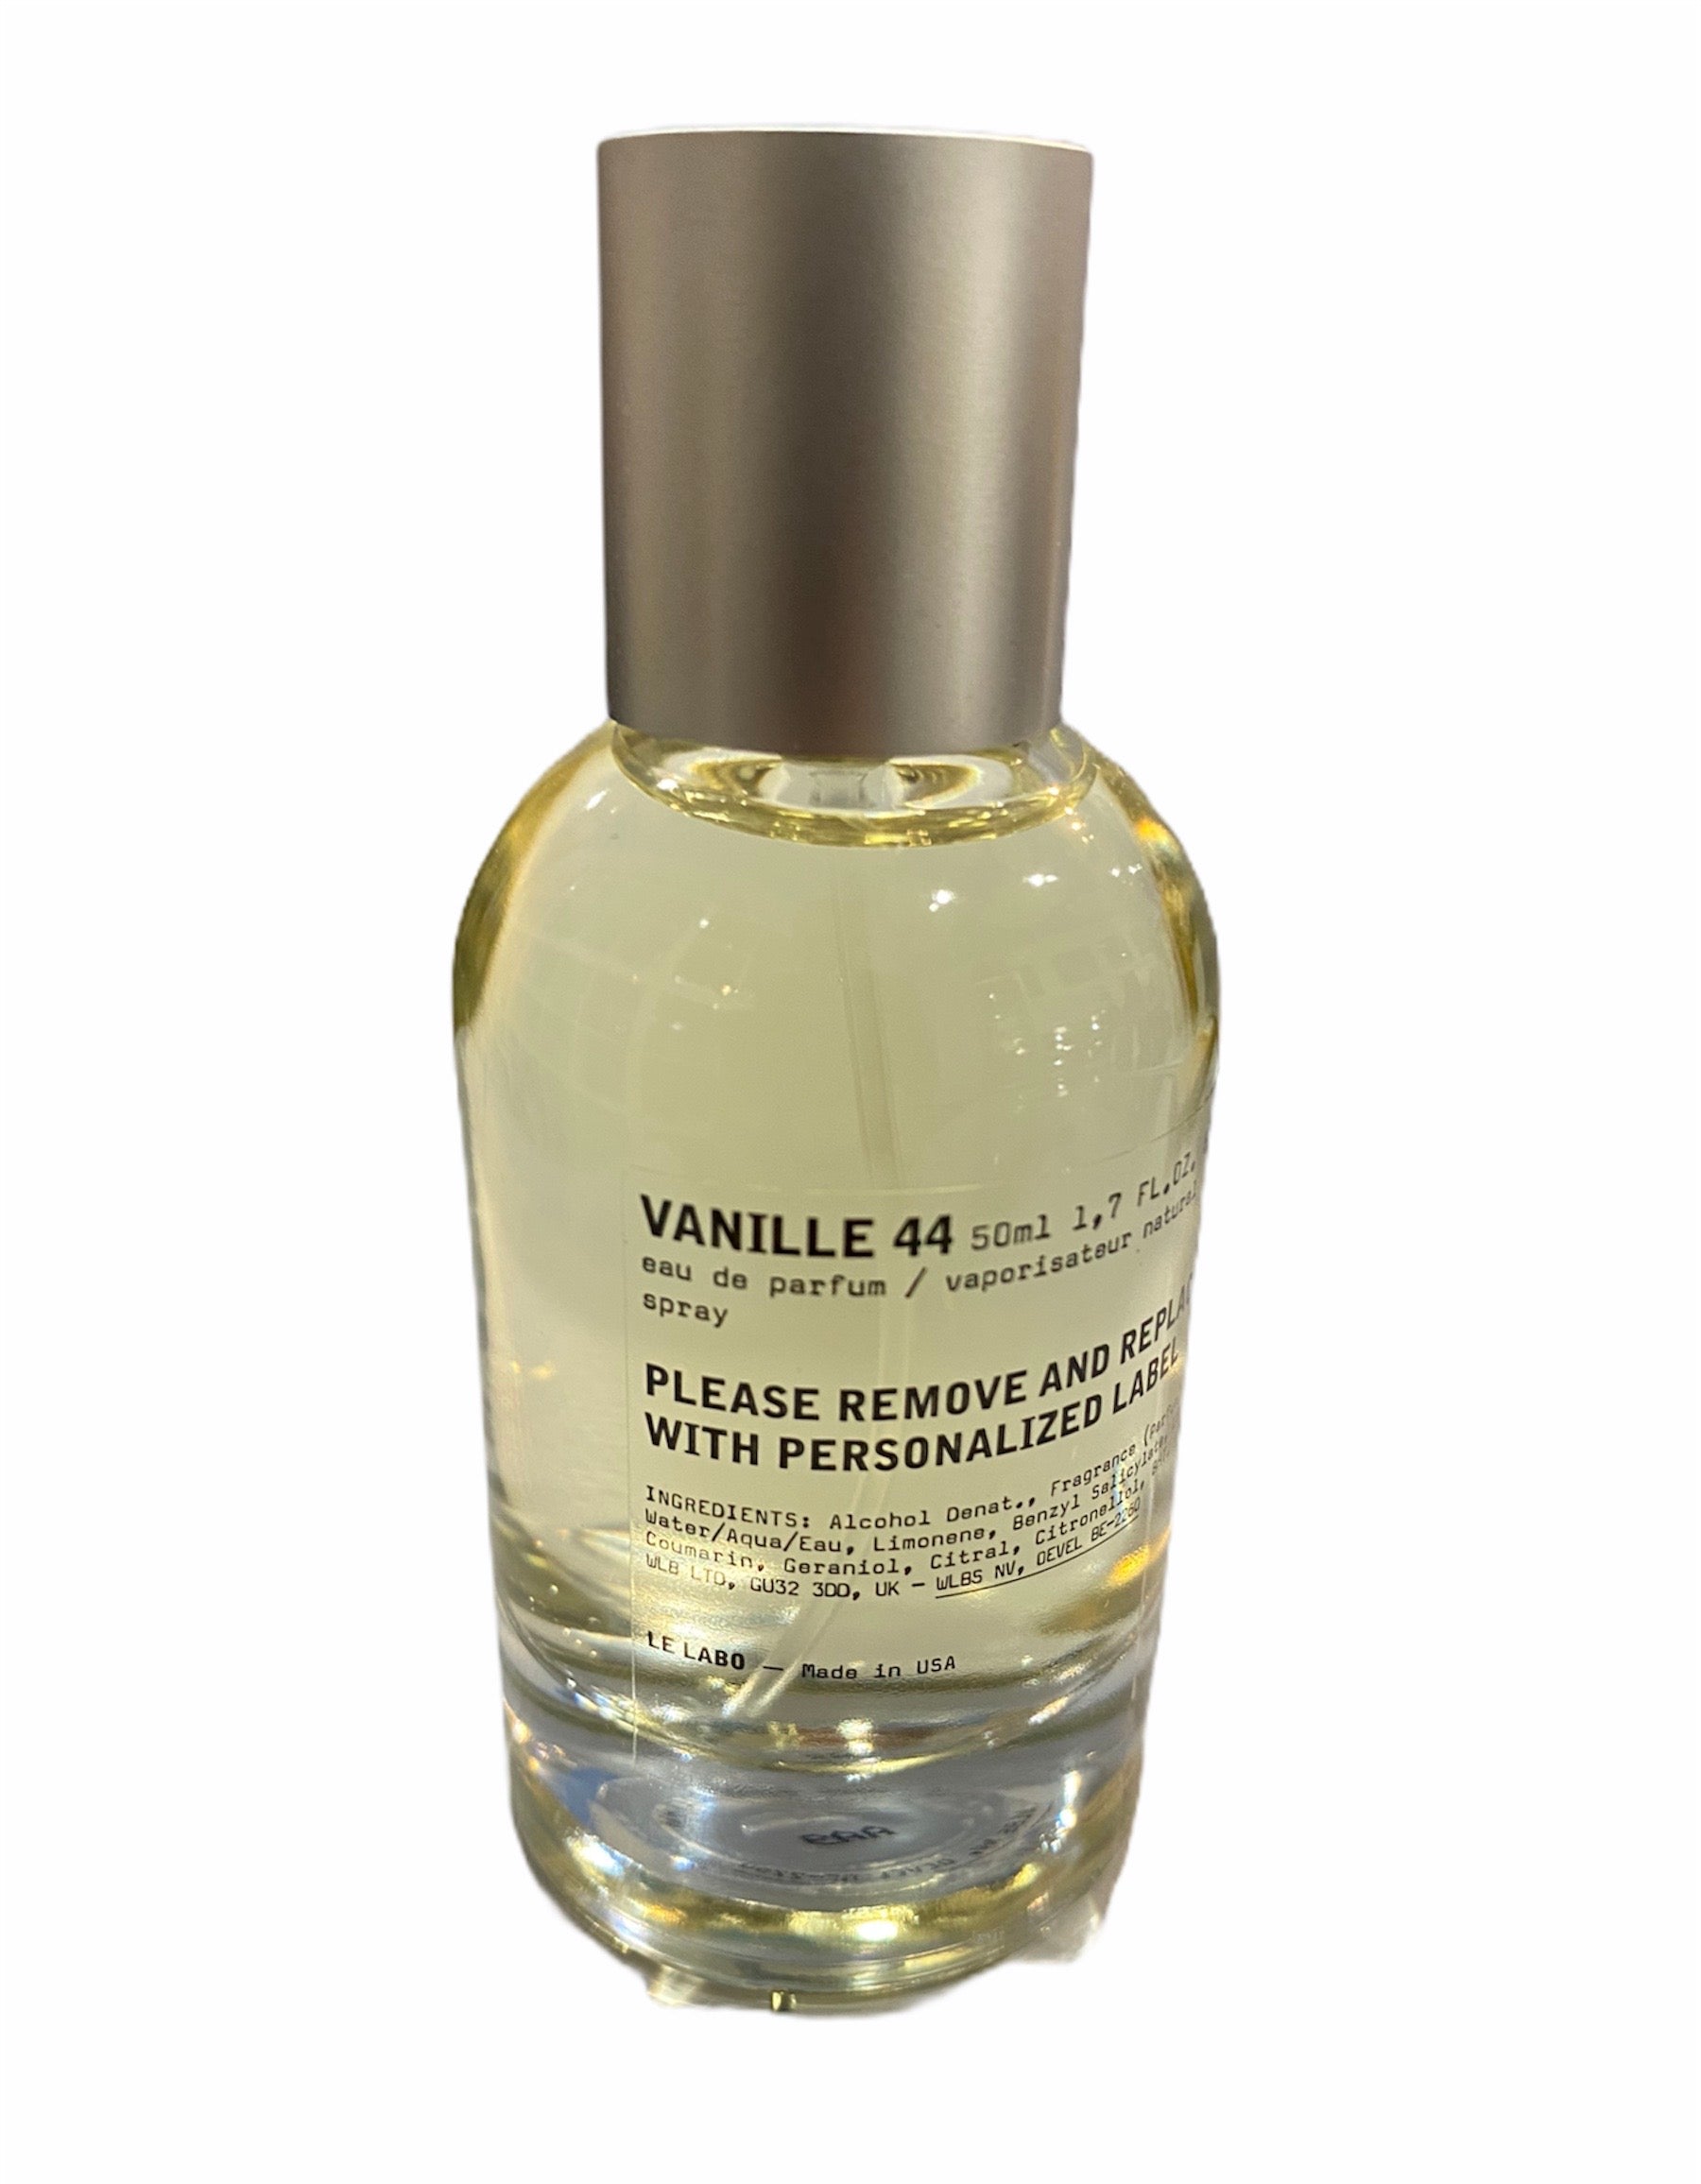 VANILLE 44 perfume 1.7oz, 50ml, Le Labo spray (unboxed).